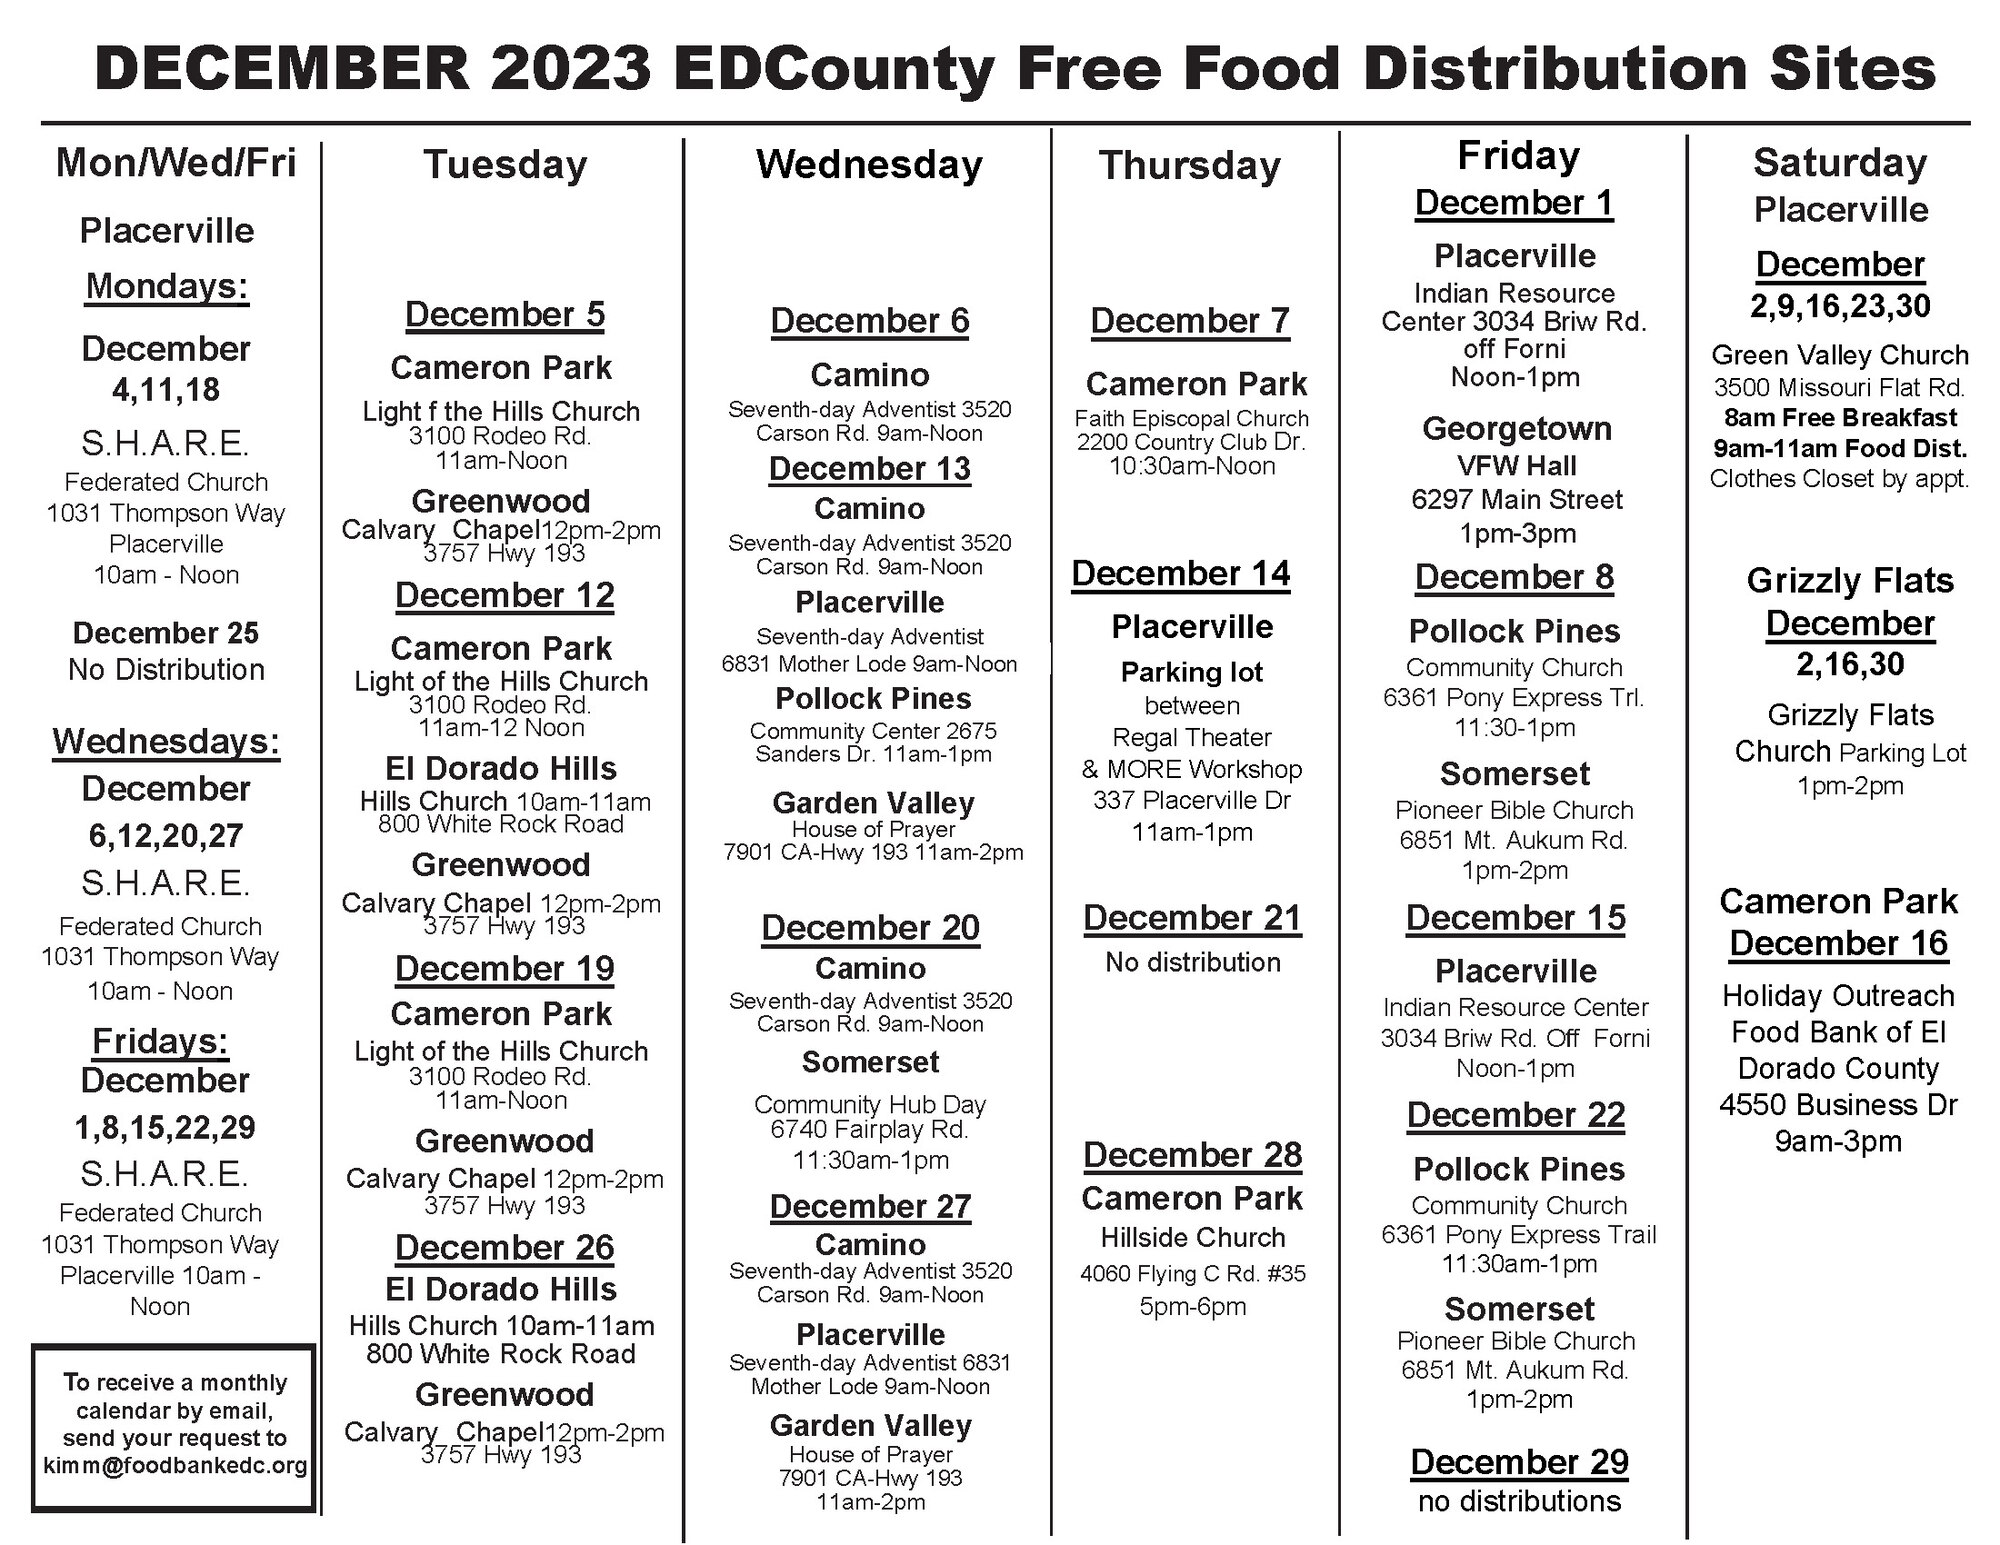 UPDATED December 2023 EDC Free Food Distribution pdf final